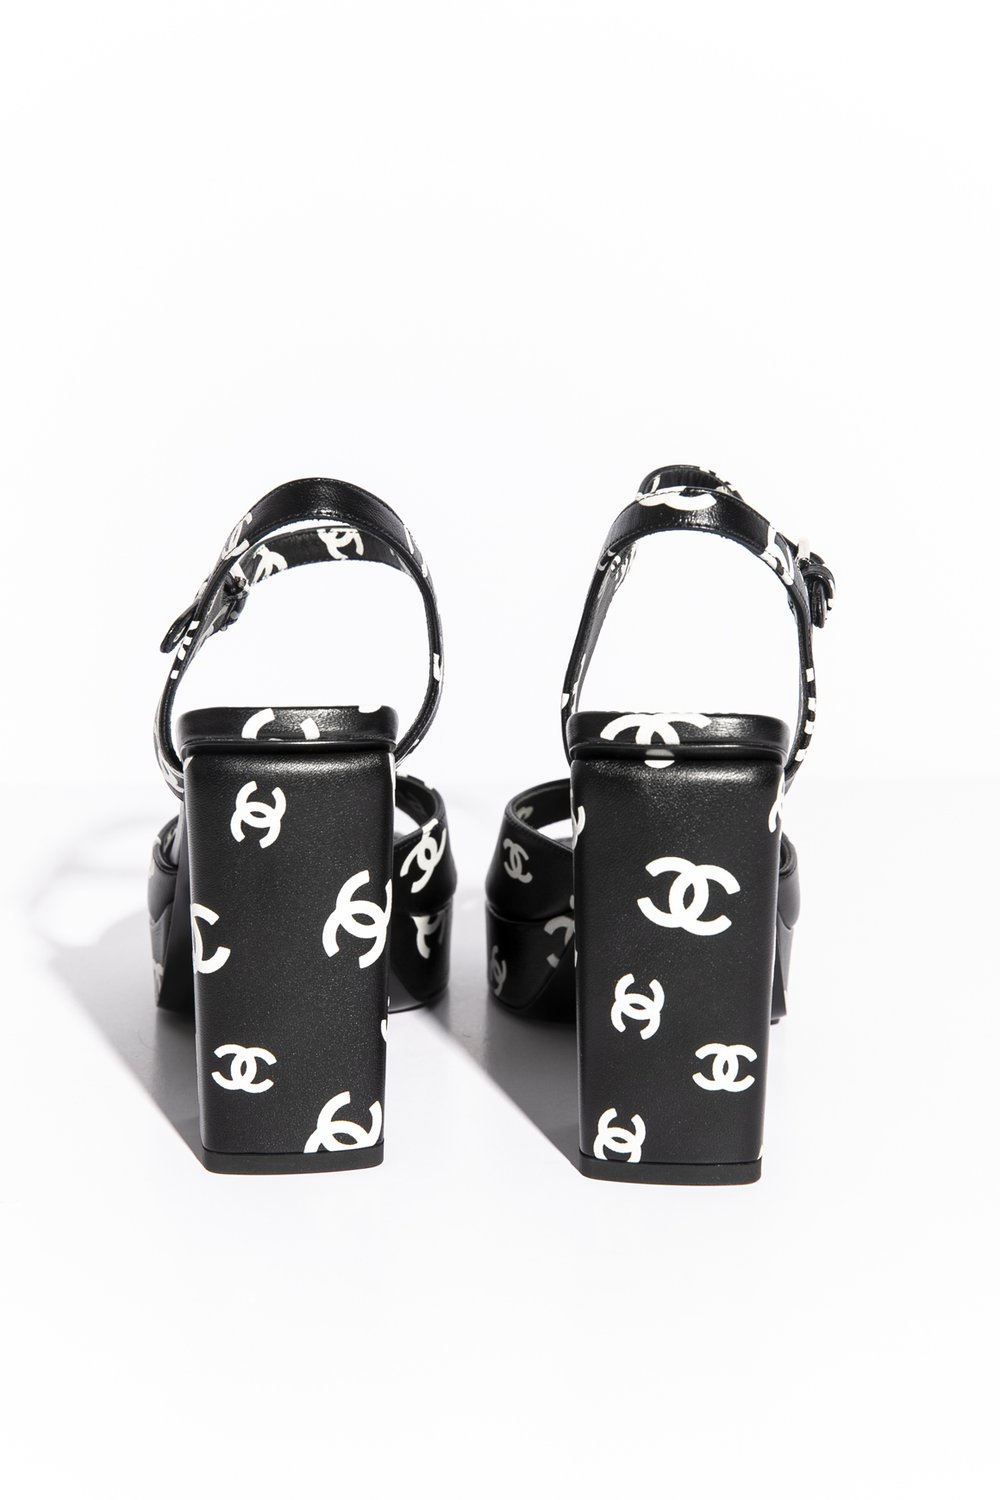 CHANEL Black & White CC Maryjane Heels (Sz. 38) — MOSS Designer